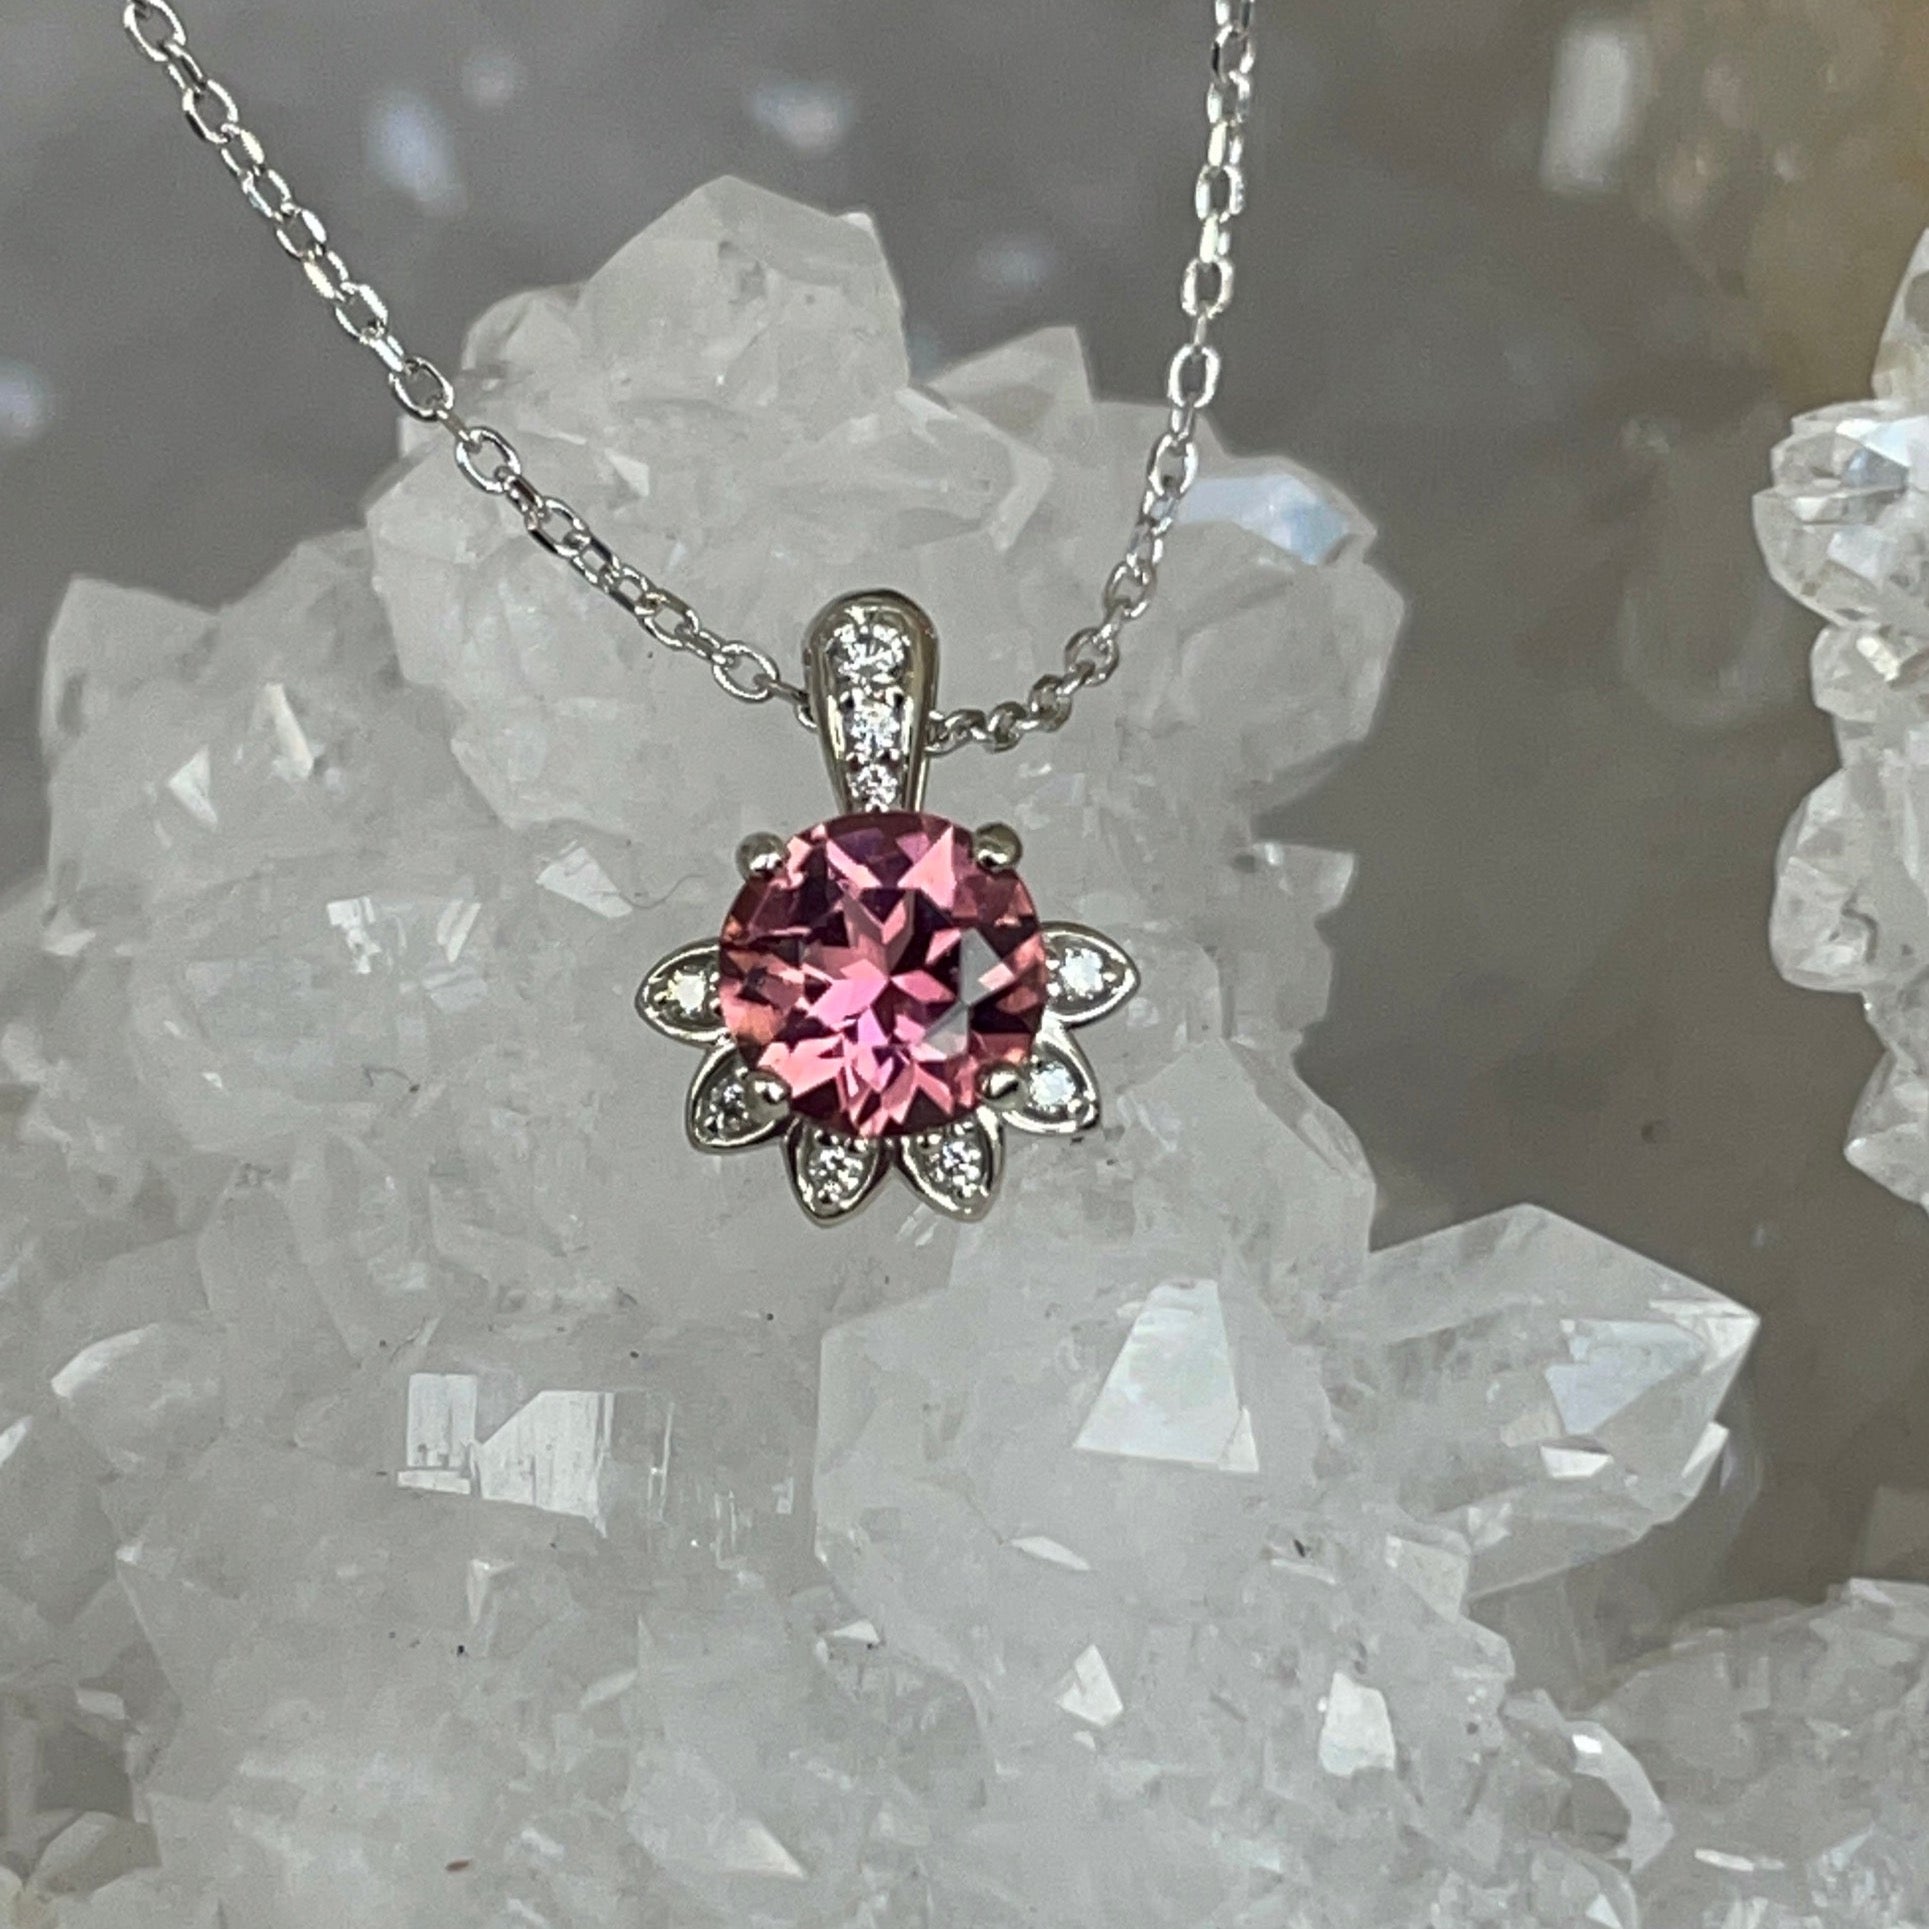 Pendant - Tourmaline .84 CT Pink Round Cut in a 14K White Gold Flower Diamond Accent